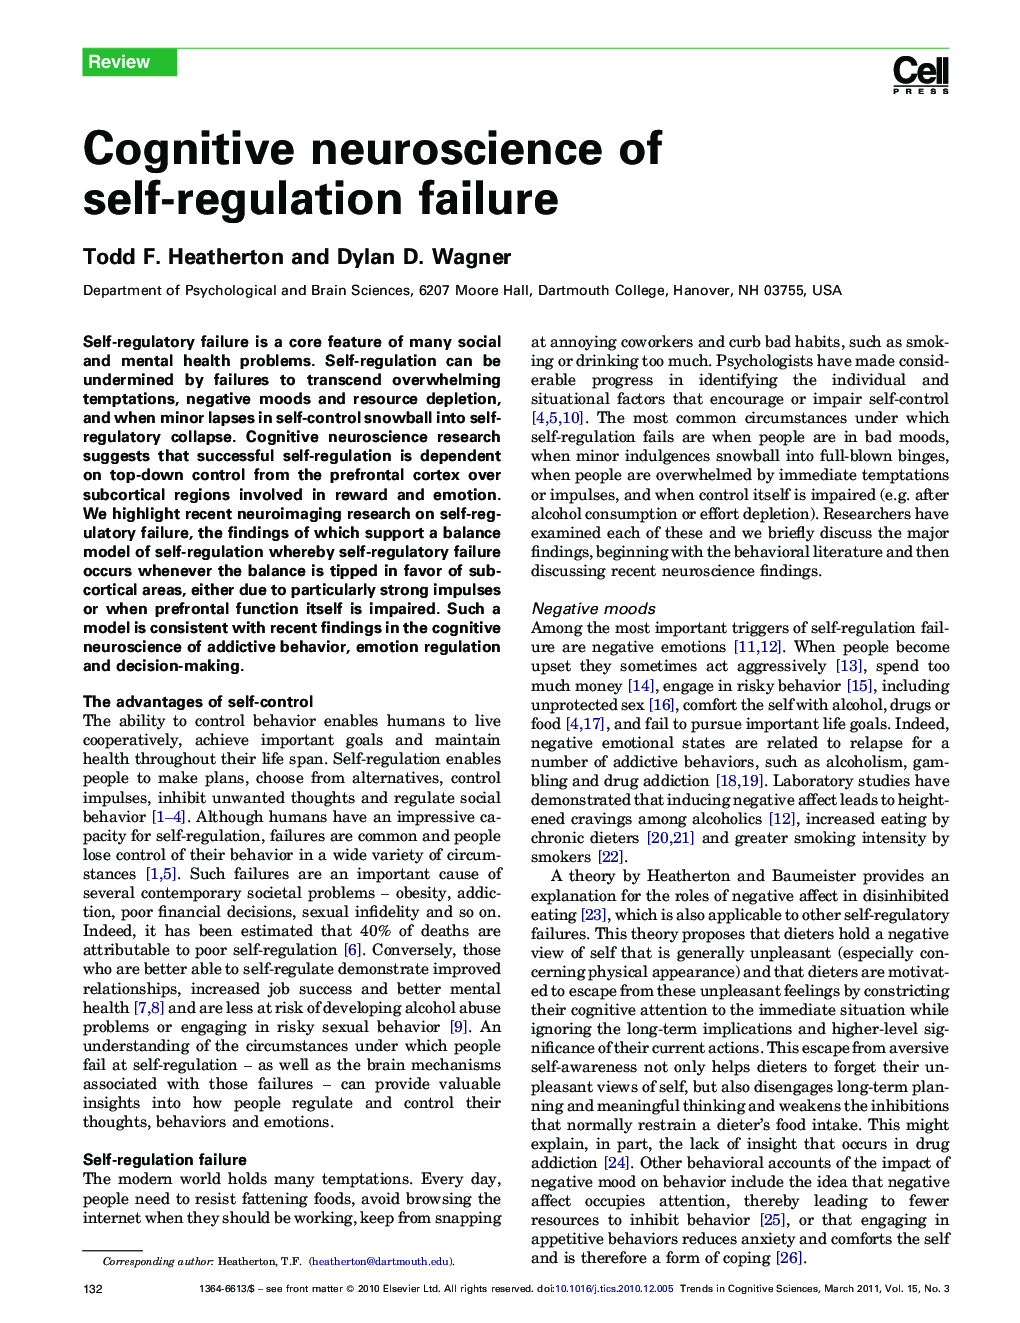 Cognitive neuroscience of self-regulation failure